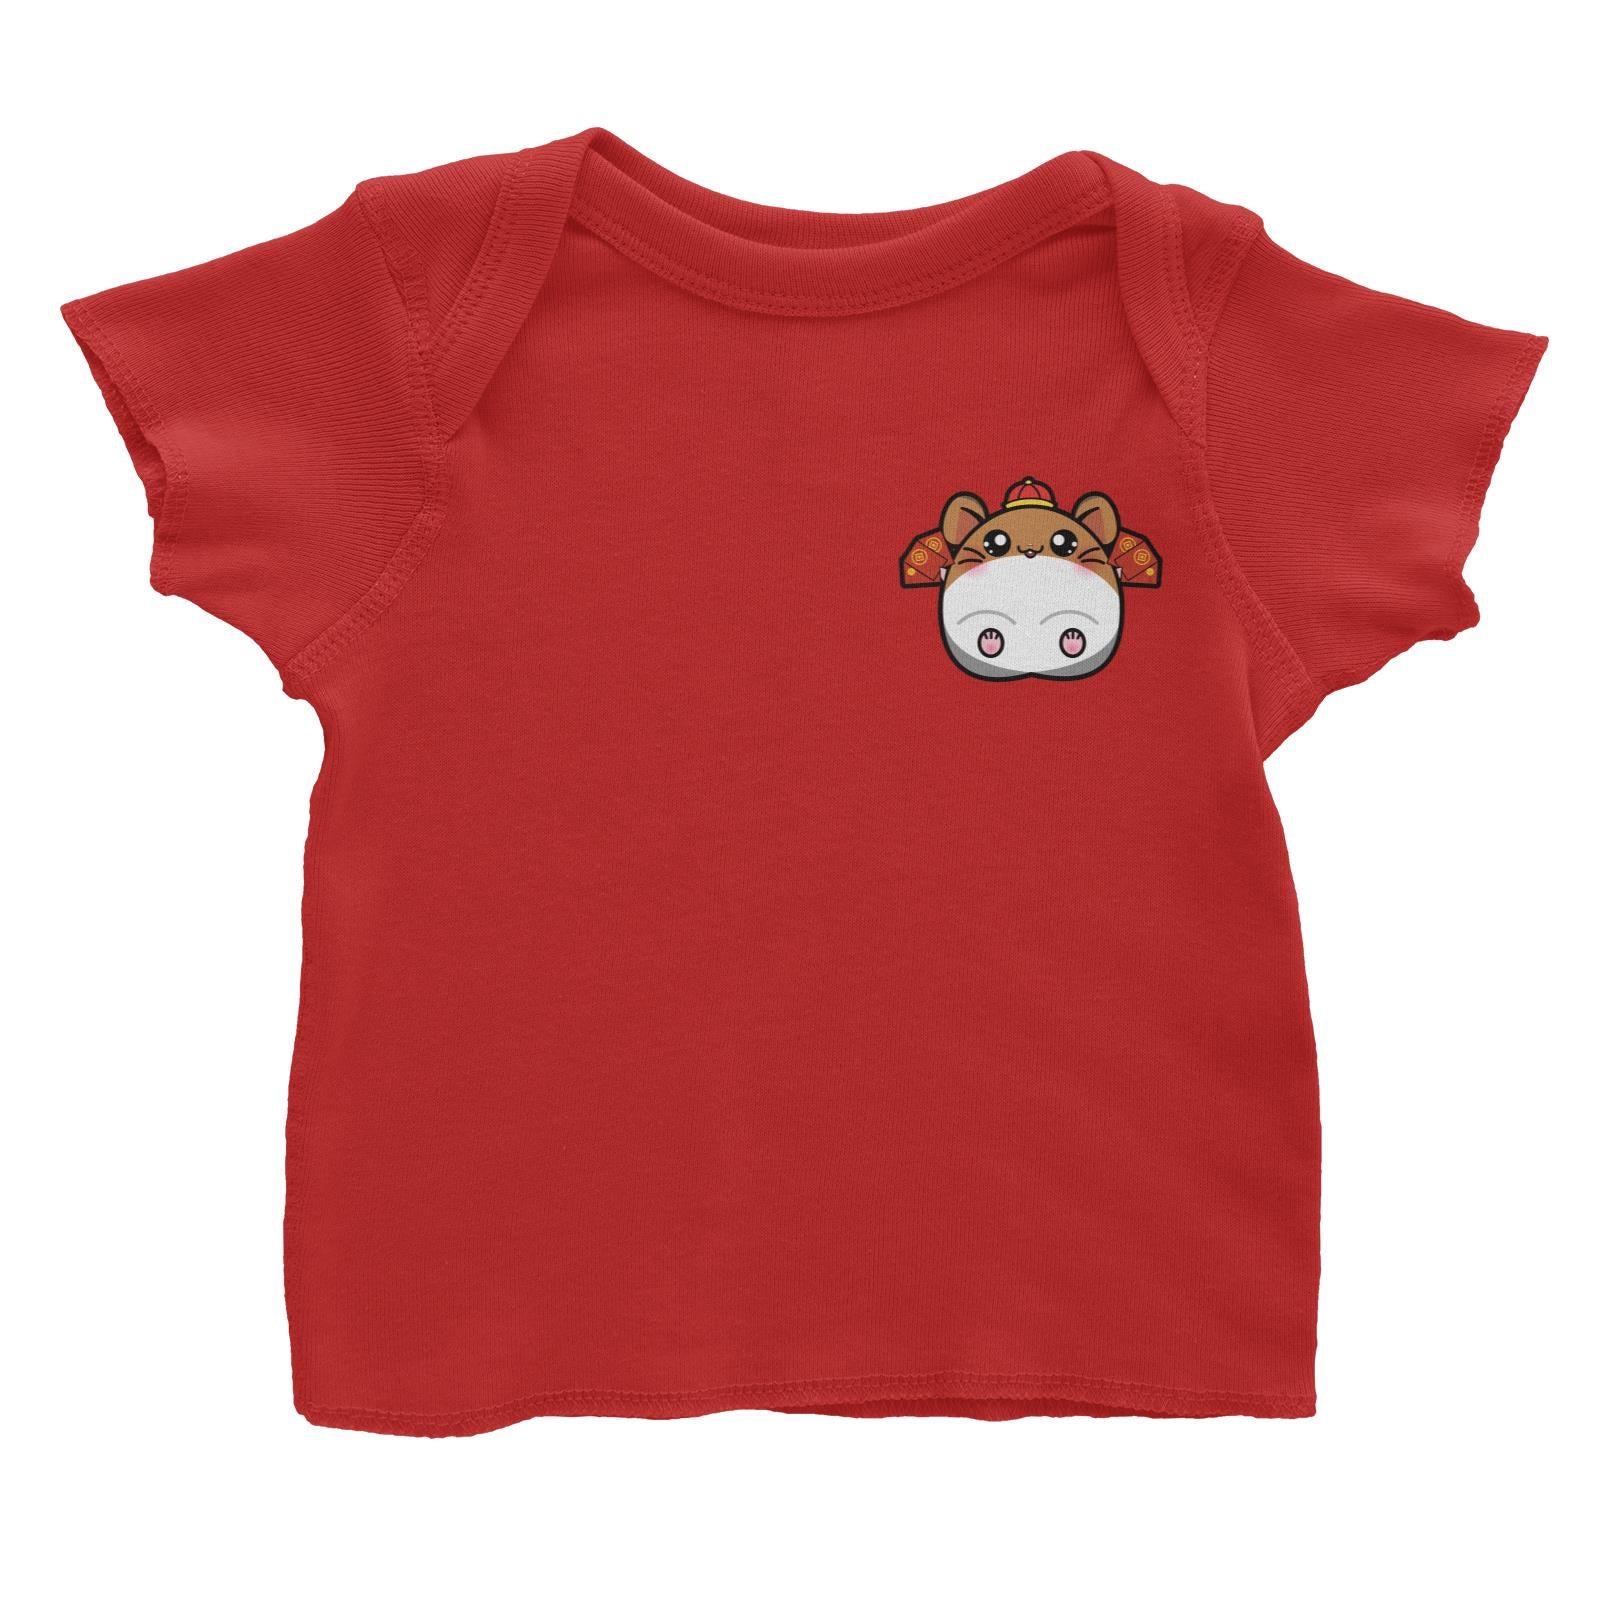 Prosperous Pocket Mouse Series Bob With AngPao Wishes Happy Prosperity Baby T-Shirt